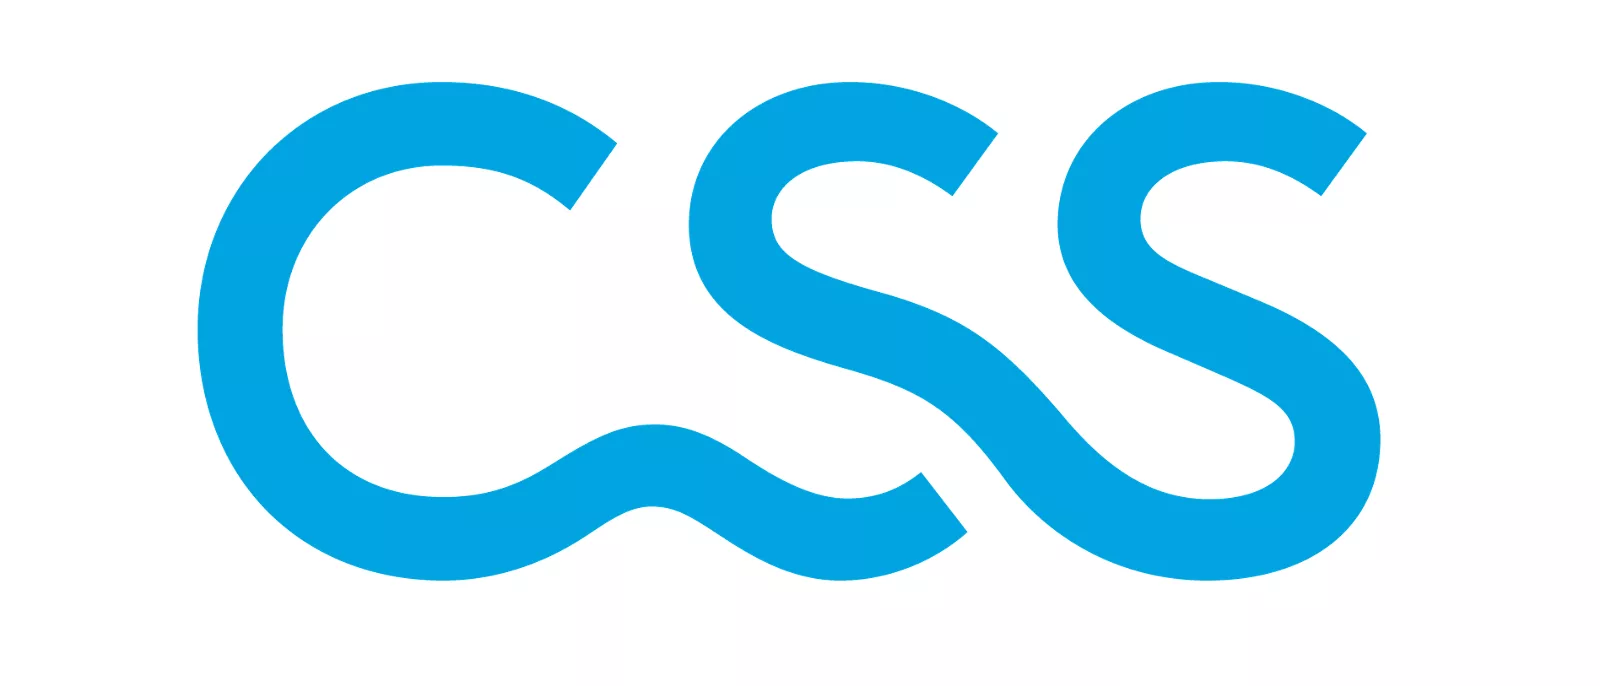 css-logo-schutzzone-large_image-21-9